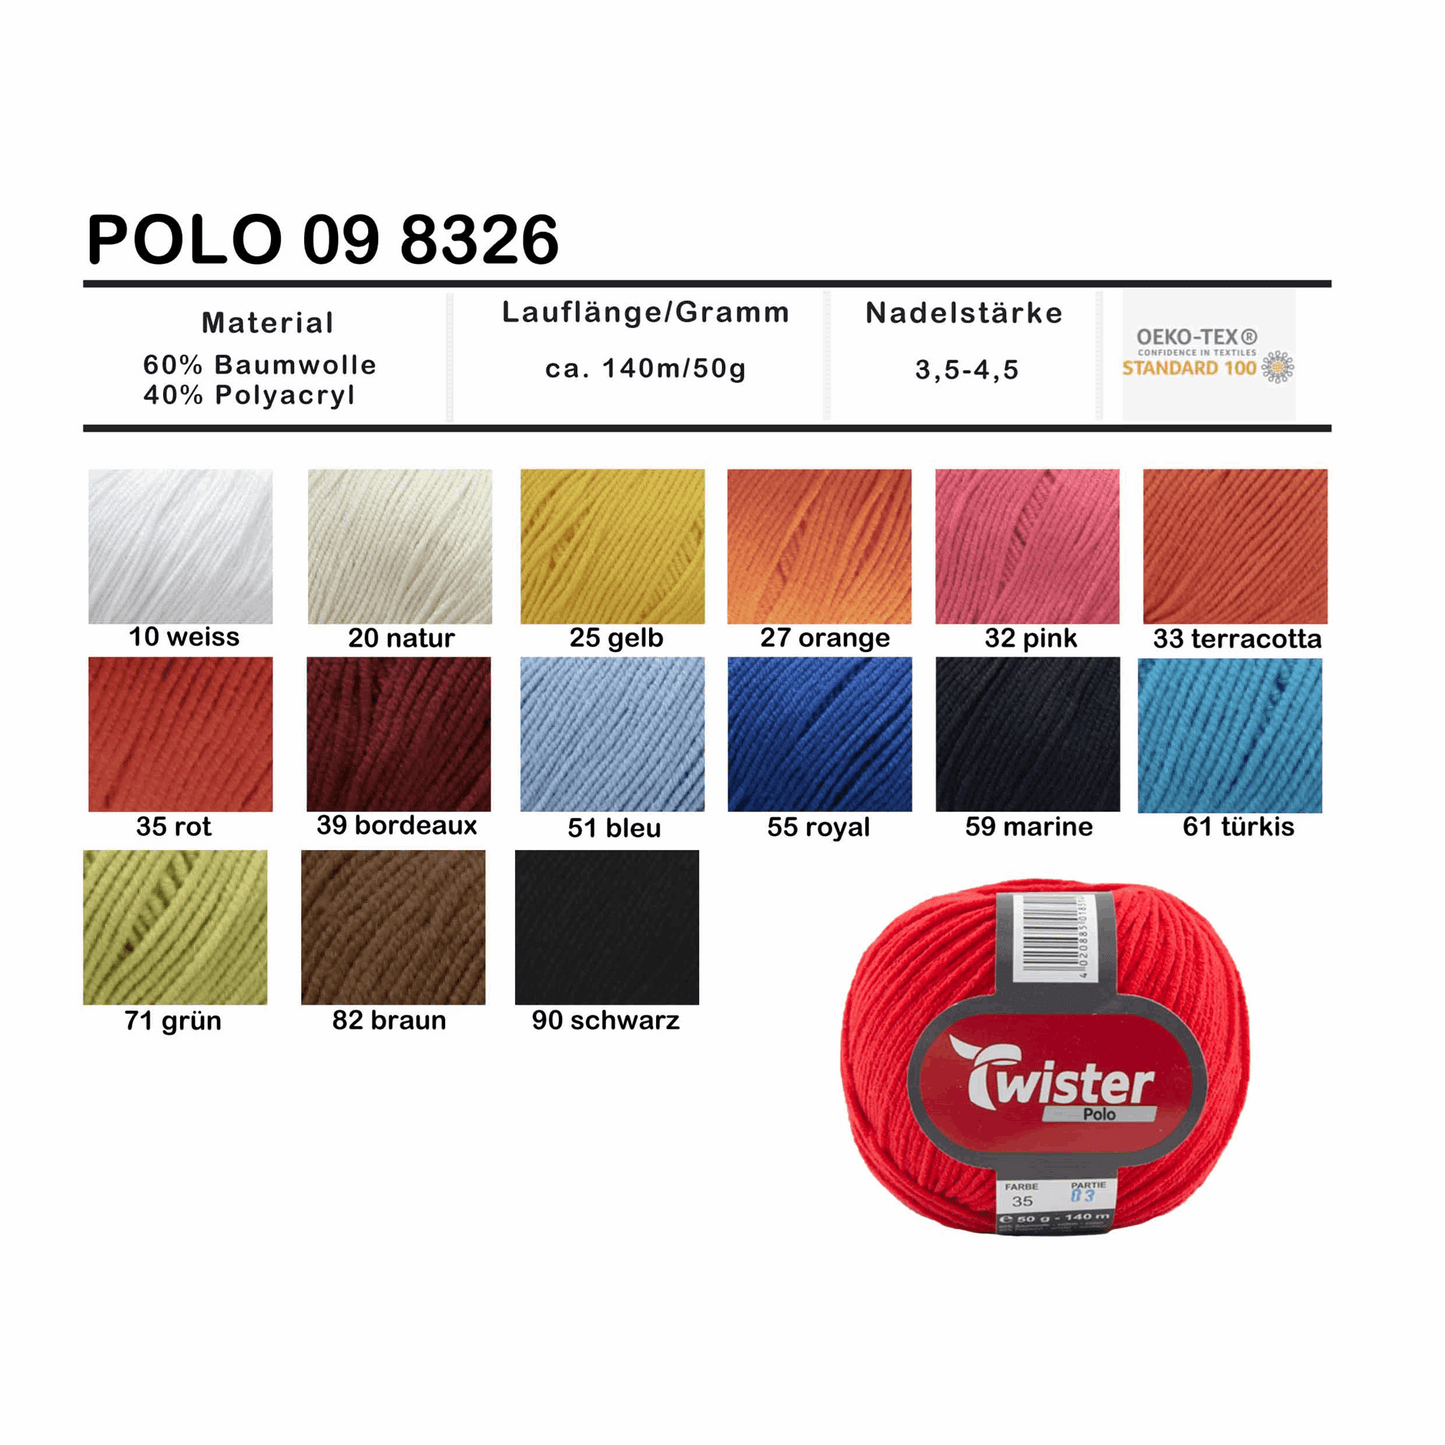 Twister Polo uni, 50g, 98326, Farbe bordeaux 39